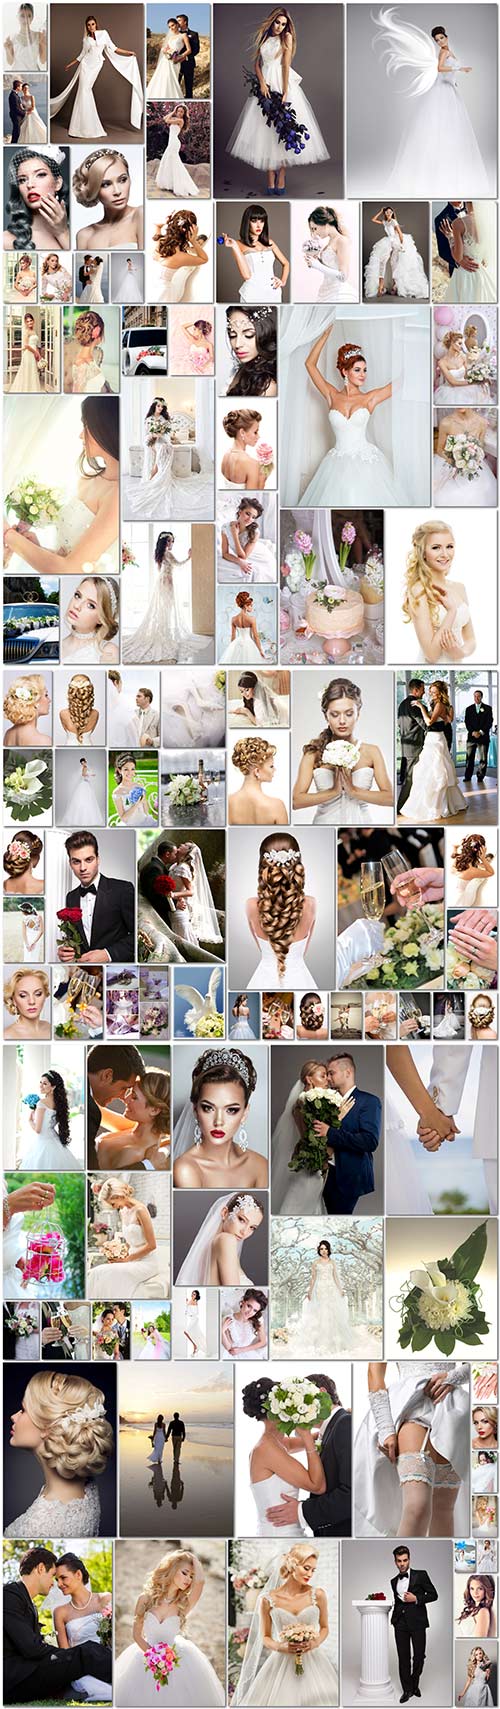 100 Bundle beautiful bride and groom, wedding stock photo vol 7